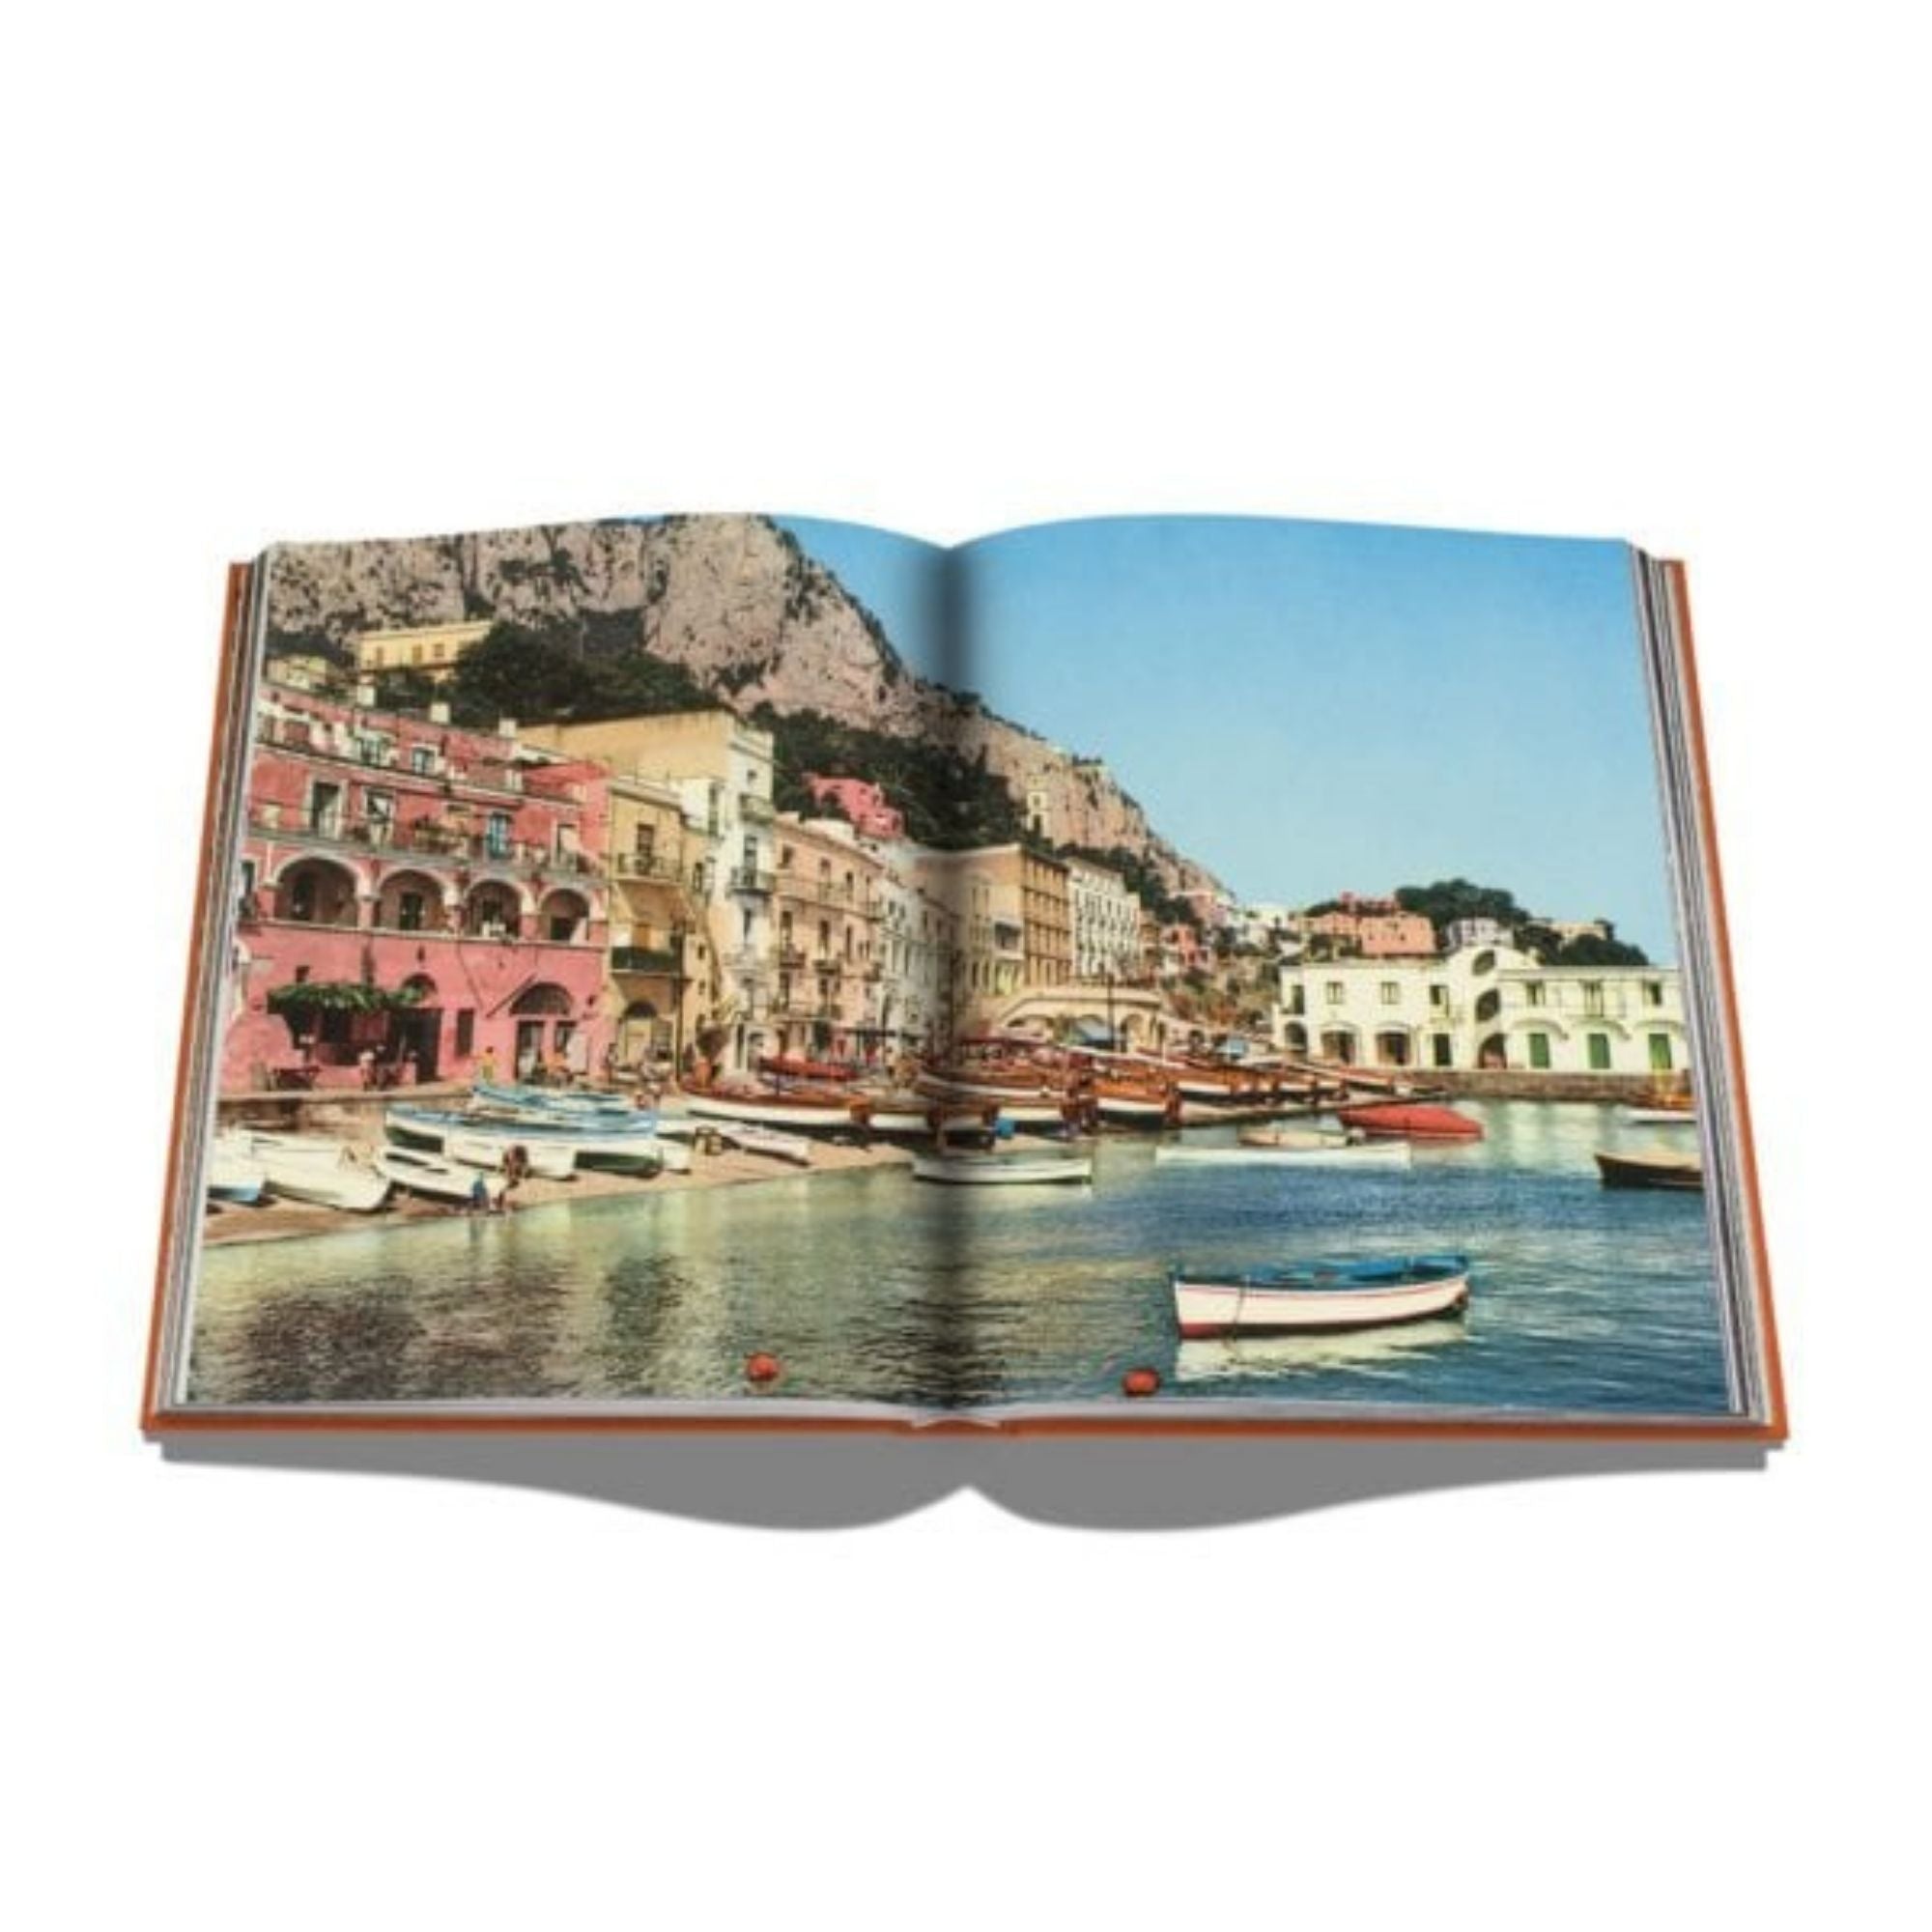 Capri Dolce Vita - THAT COOL LIVING